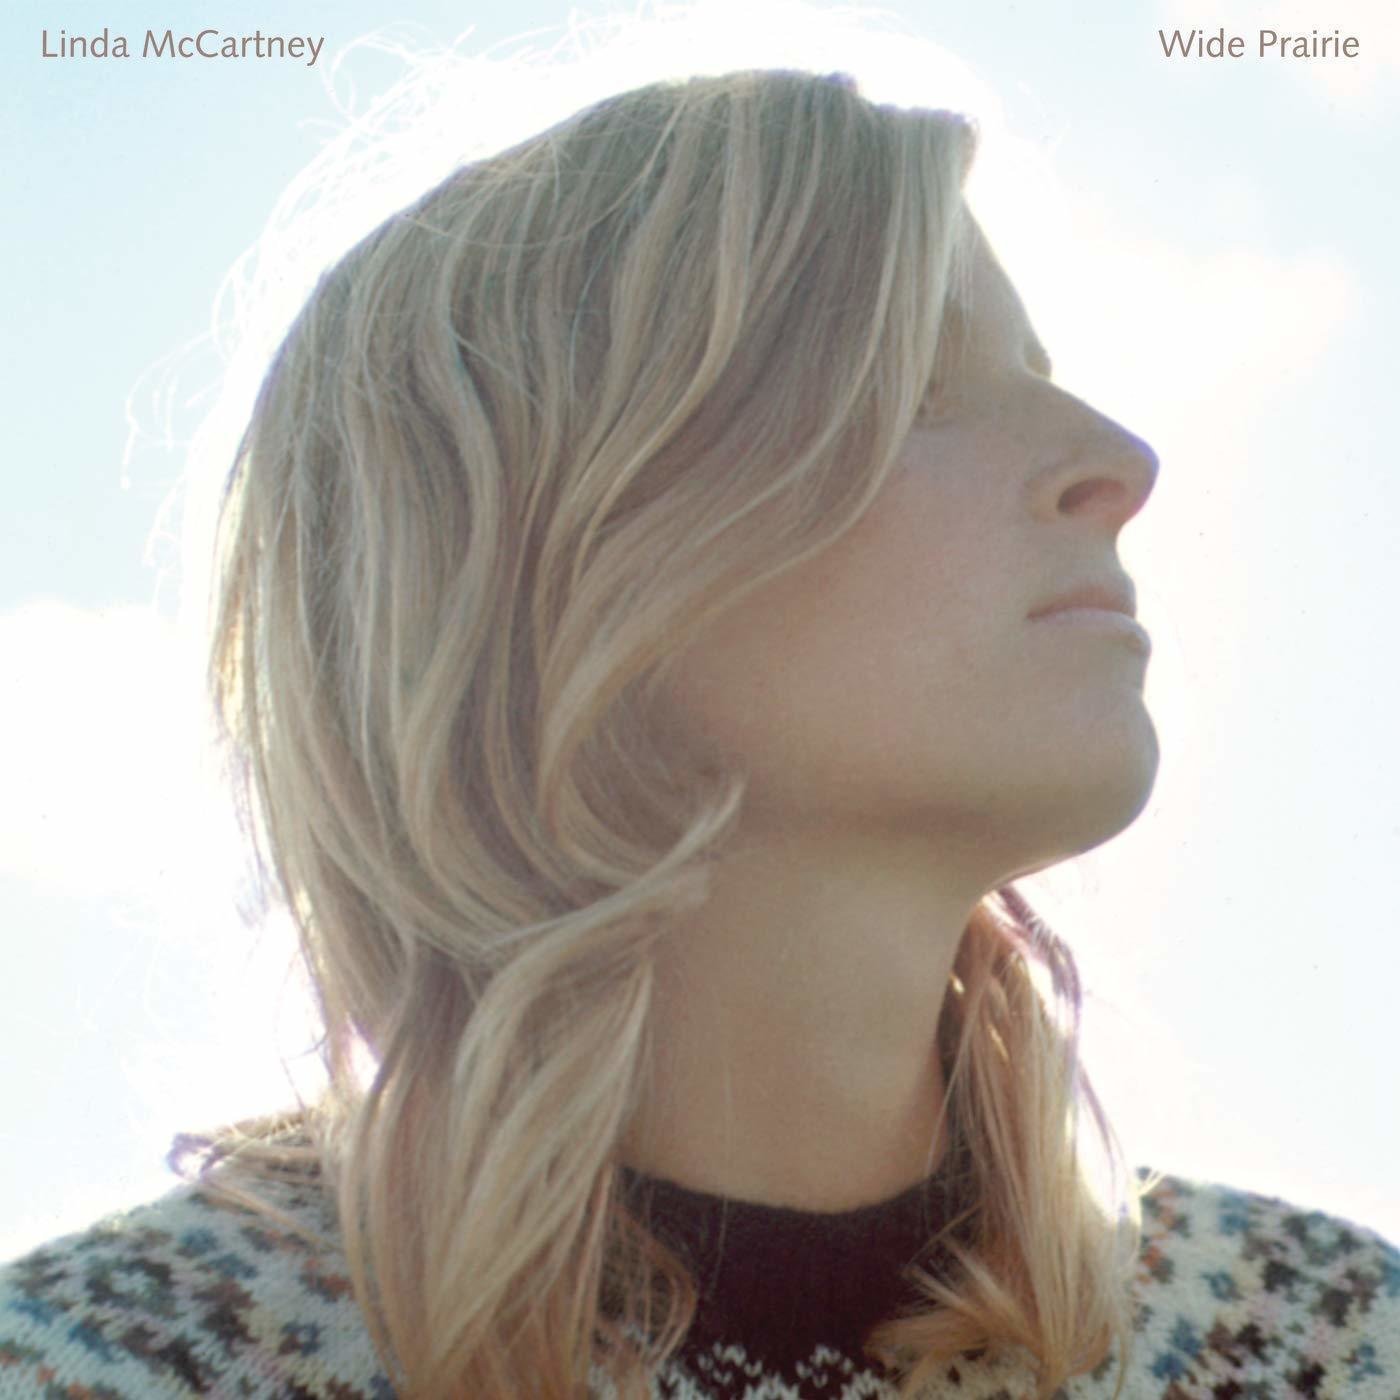 Disco de vinilo Linda McCartney - Wide Prairie (LP)